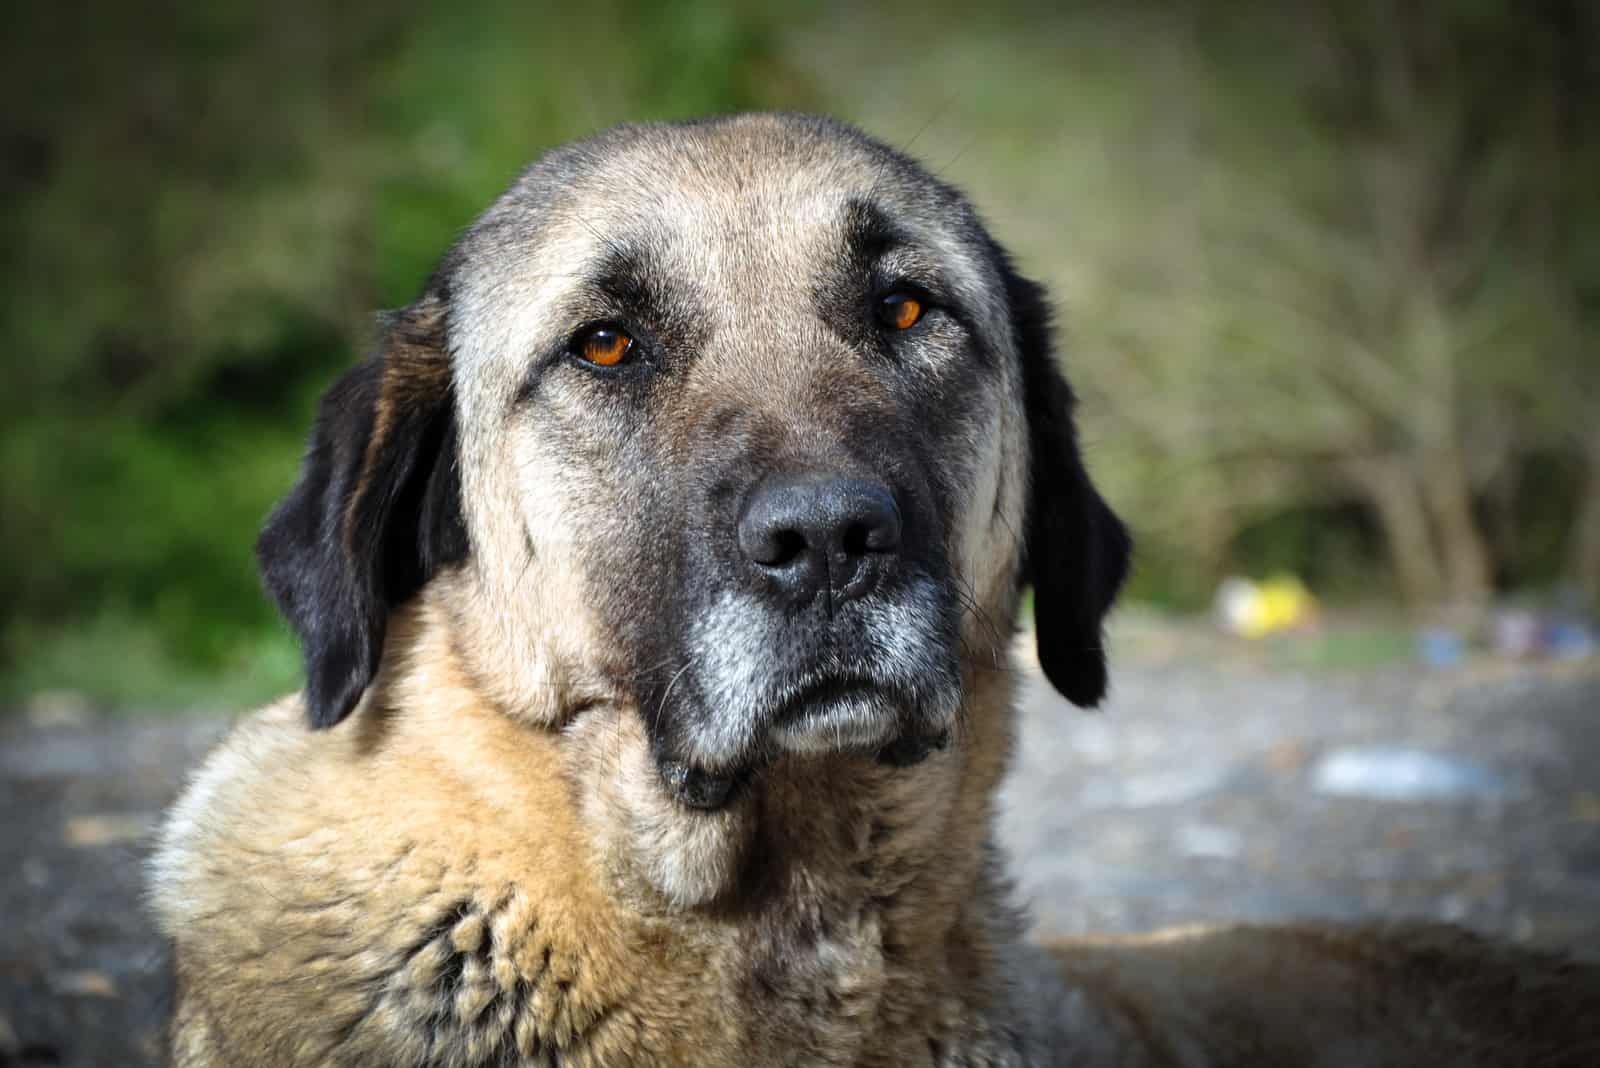 anatolian shepherd face portrait